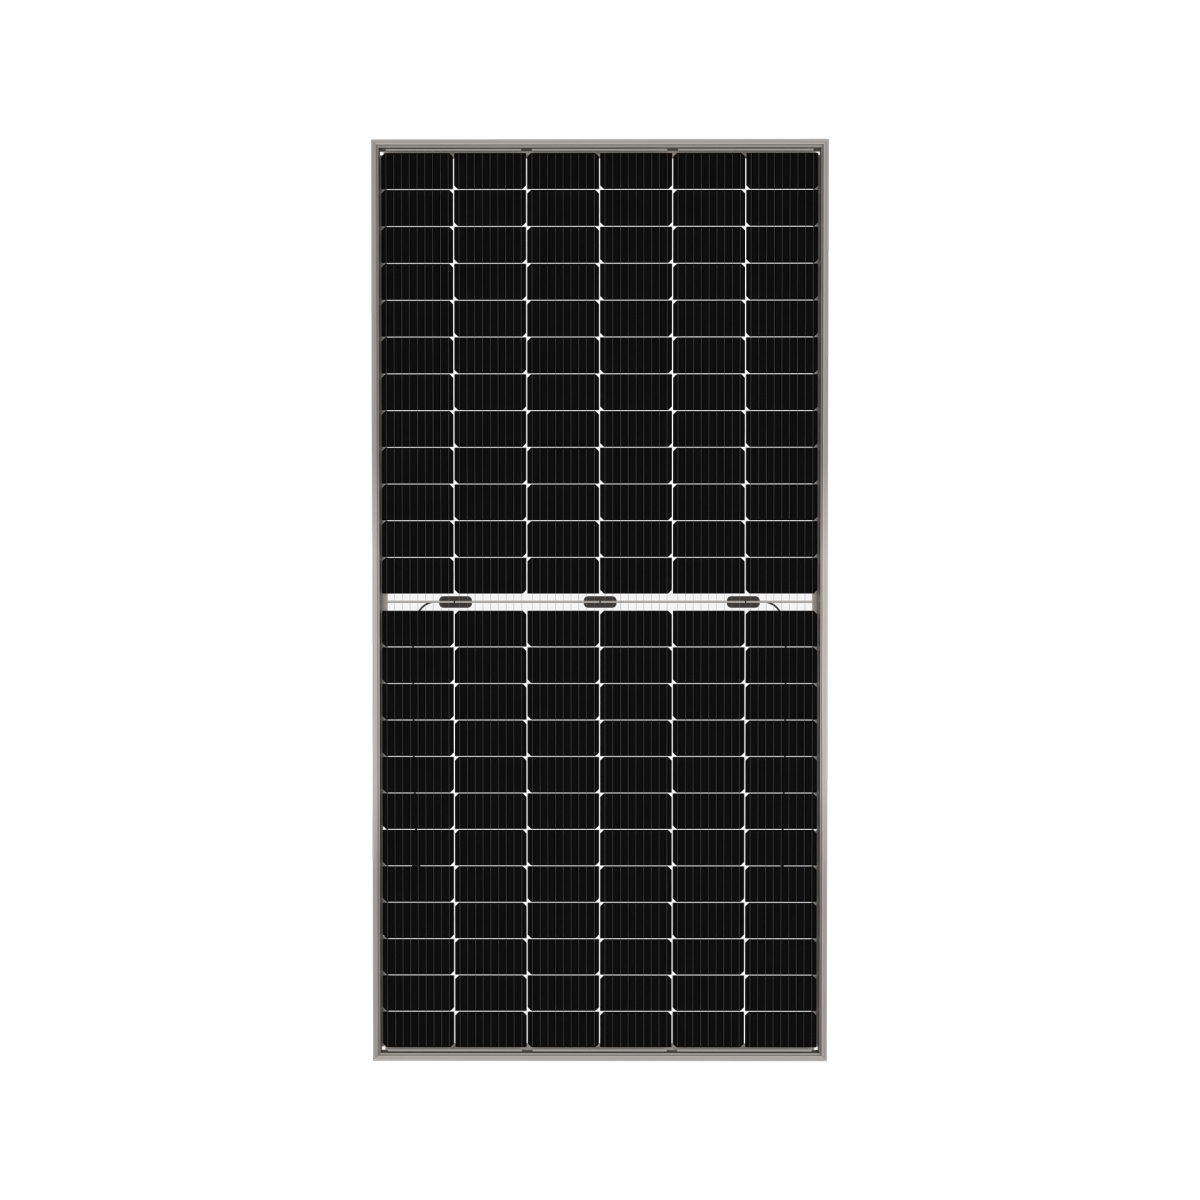 TommaTech 455 Watt 144 Percmono Bifacial Half-Cut Multi Busbar Solar Panel